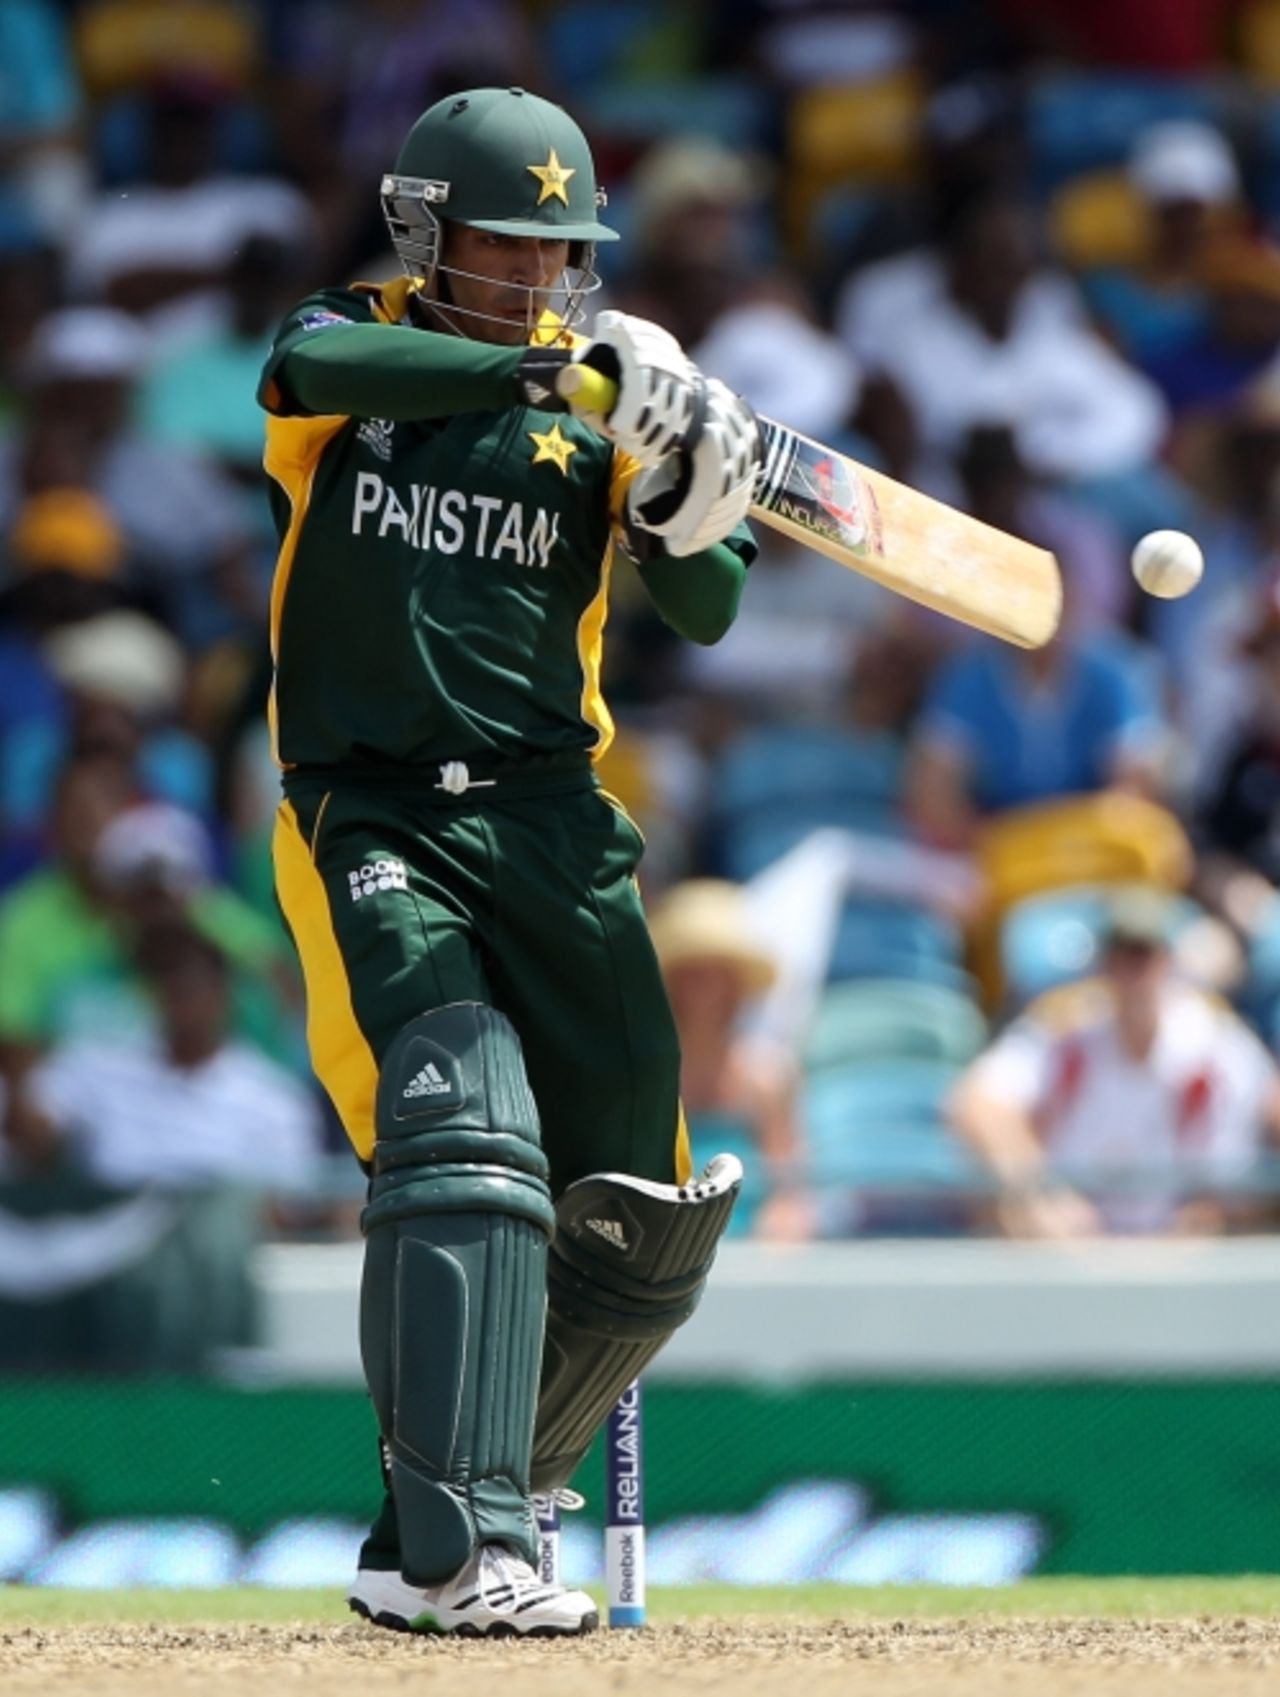 Salman Butt gave Pakistan a good start with 34 from 26 balls, England v Pakistan, Group E, World Twenty20, Barbados, May 6, 2010

